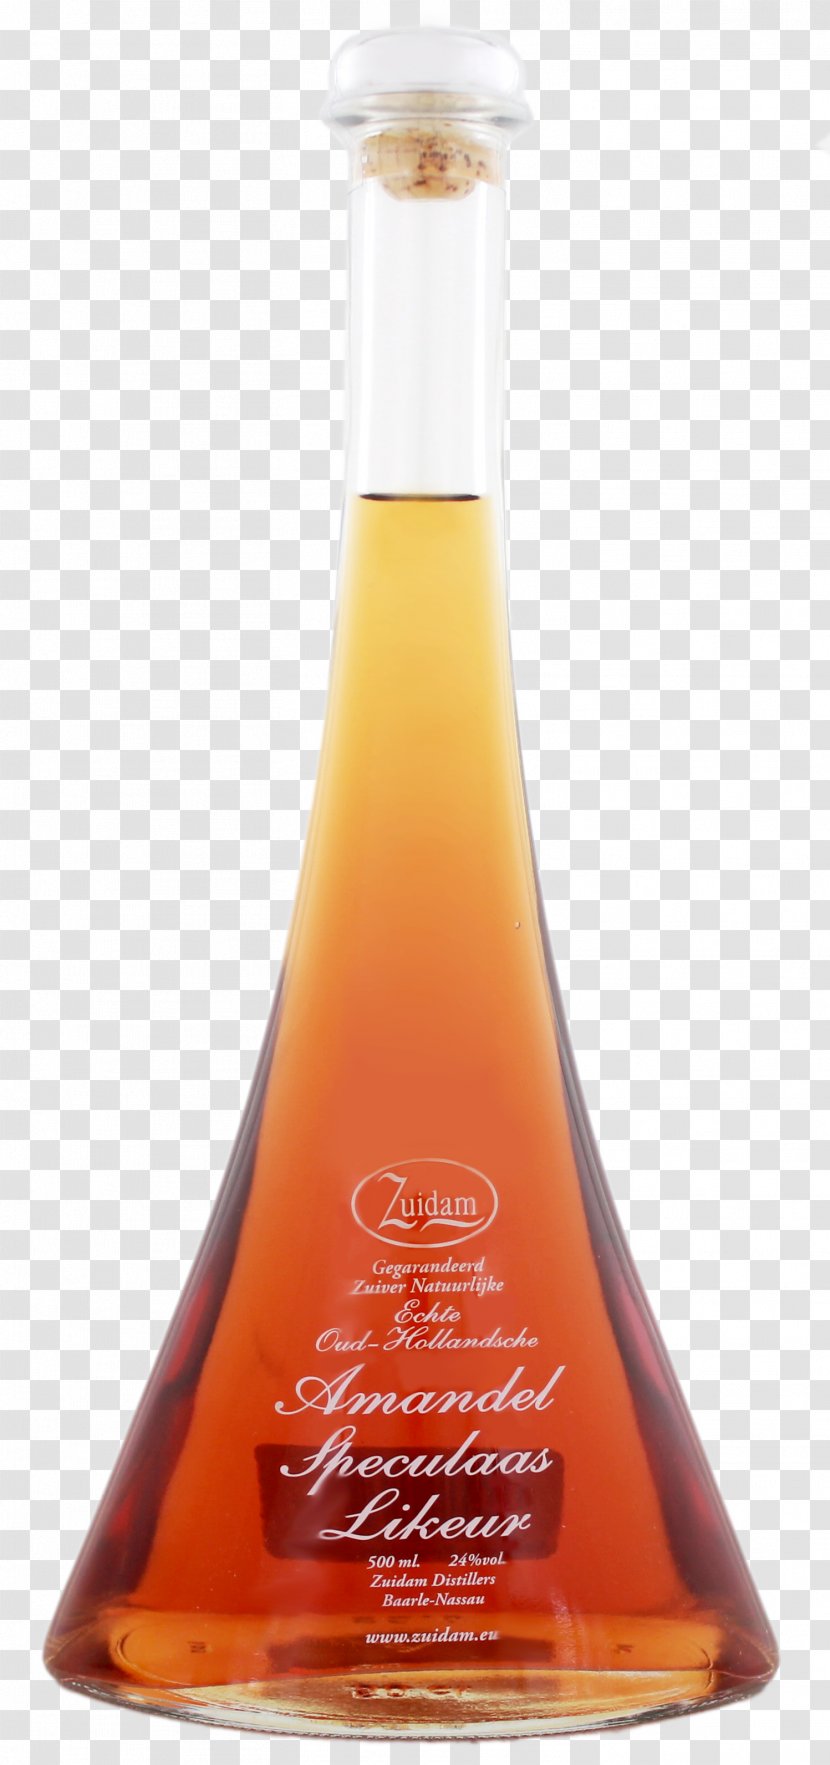 Liqueur Glass Bottle LiquidM - Aperitifs And Digestifs Transparent PNG